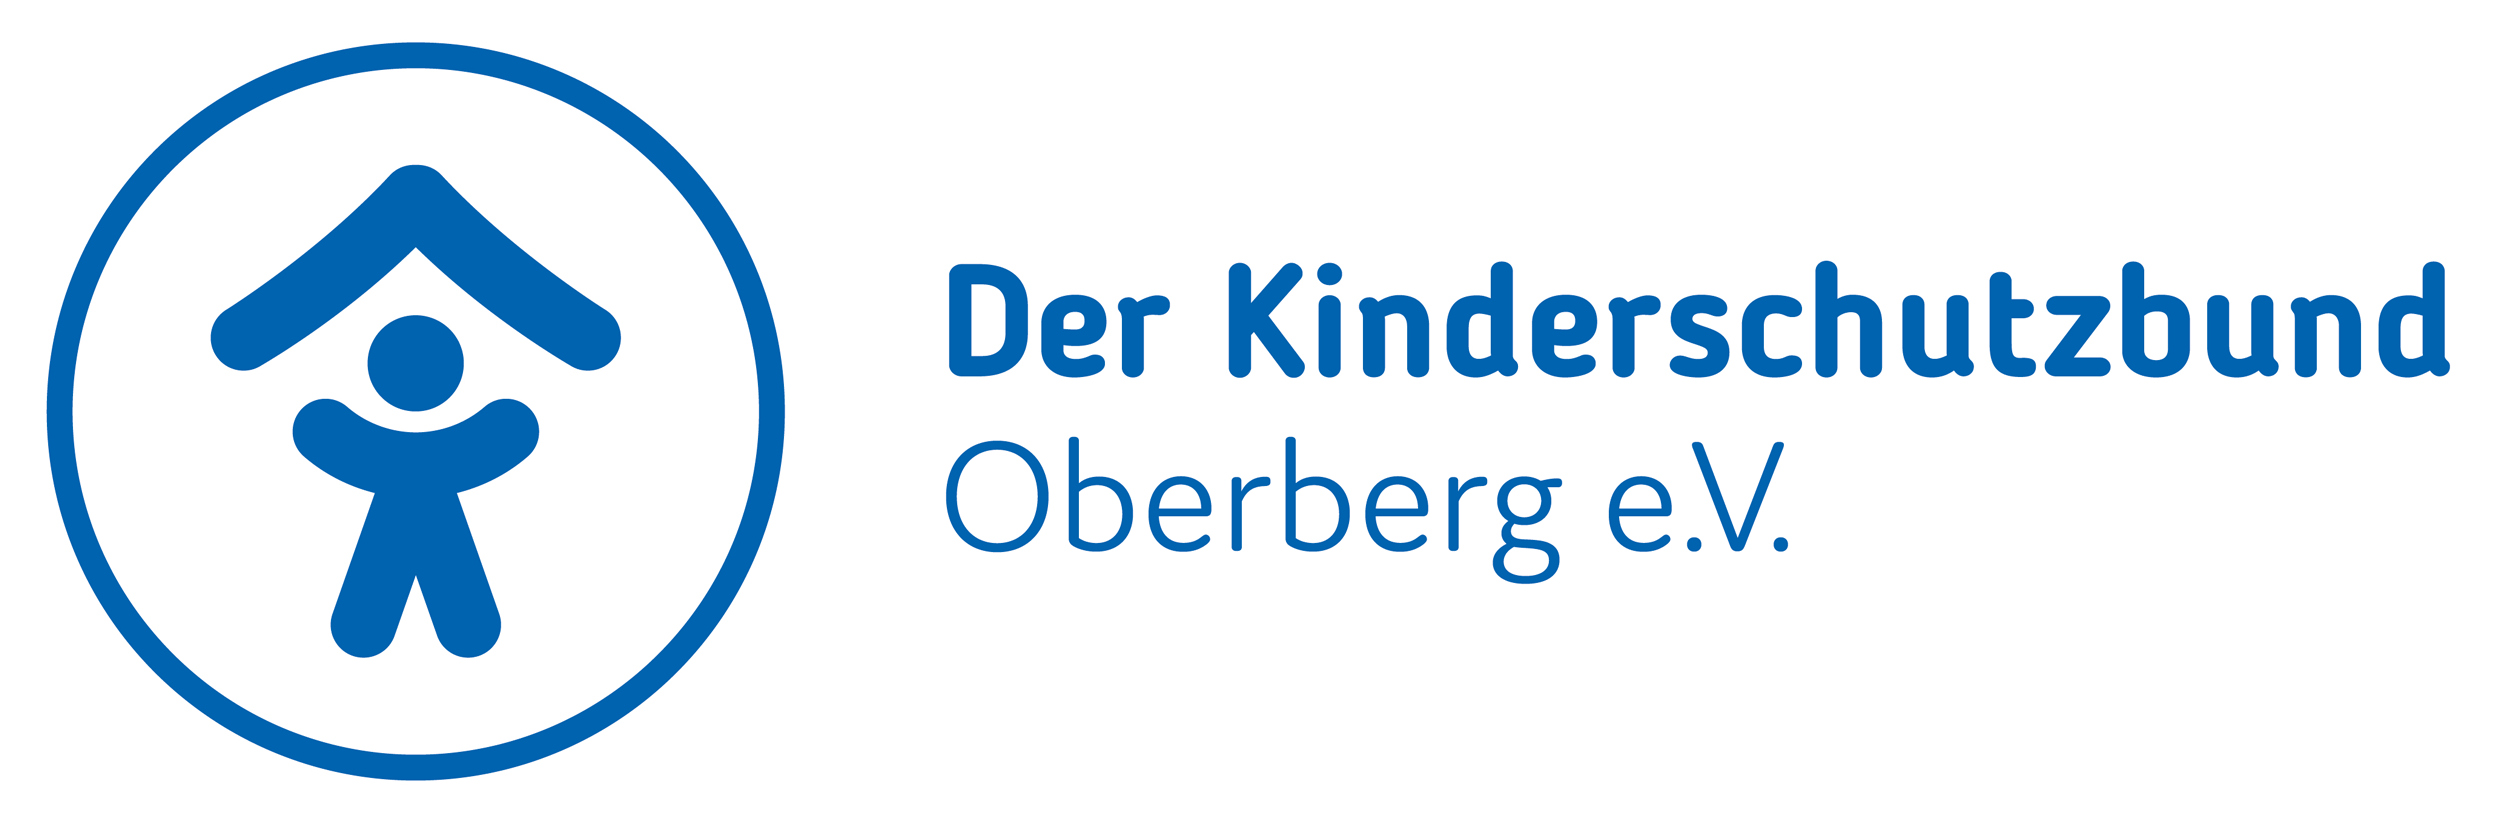 Kinderschutzbund Oberberg e.V.